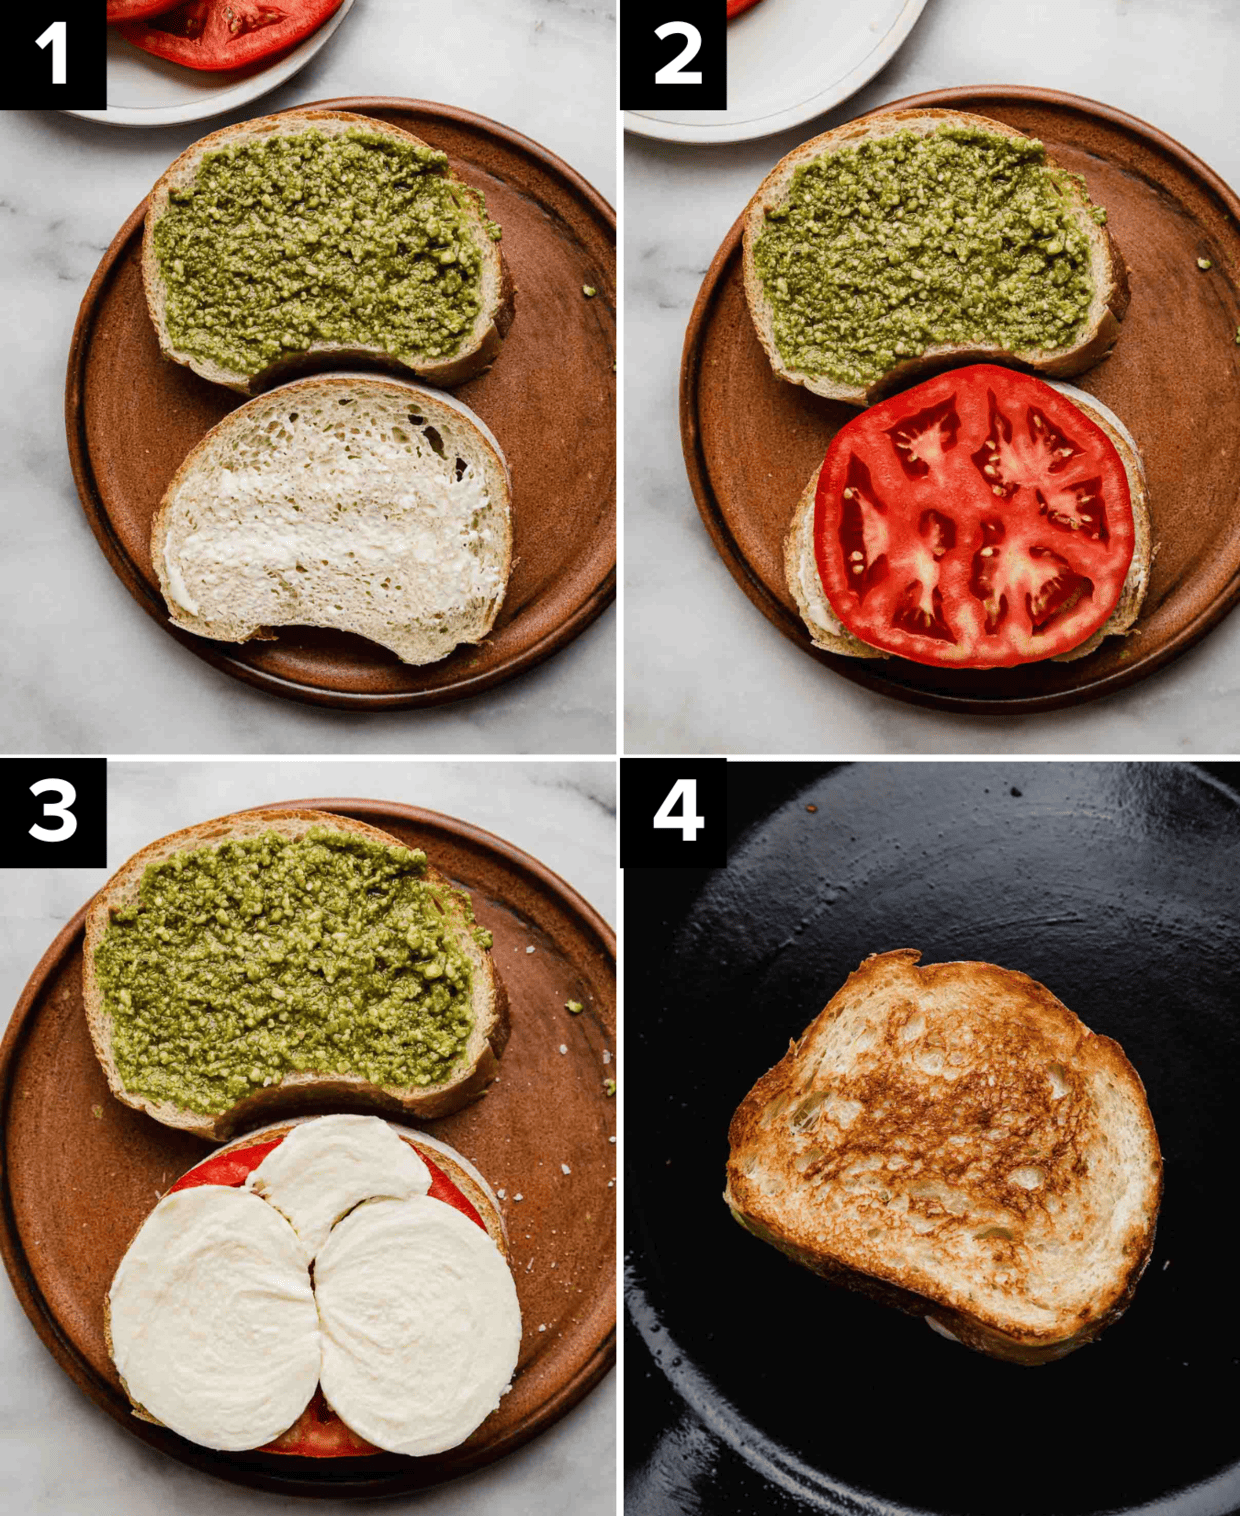 Four images showing how to make a Tomato Pesto Mozzarella Sandwich on a skillet or panini press.